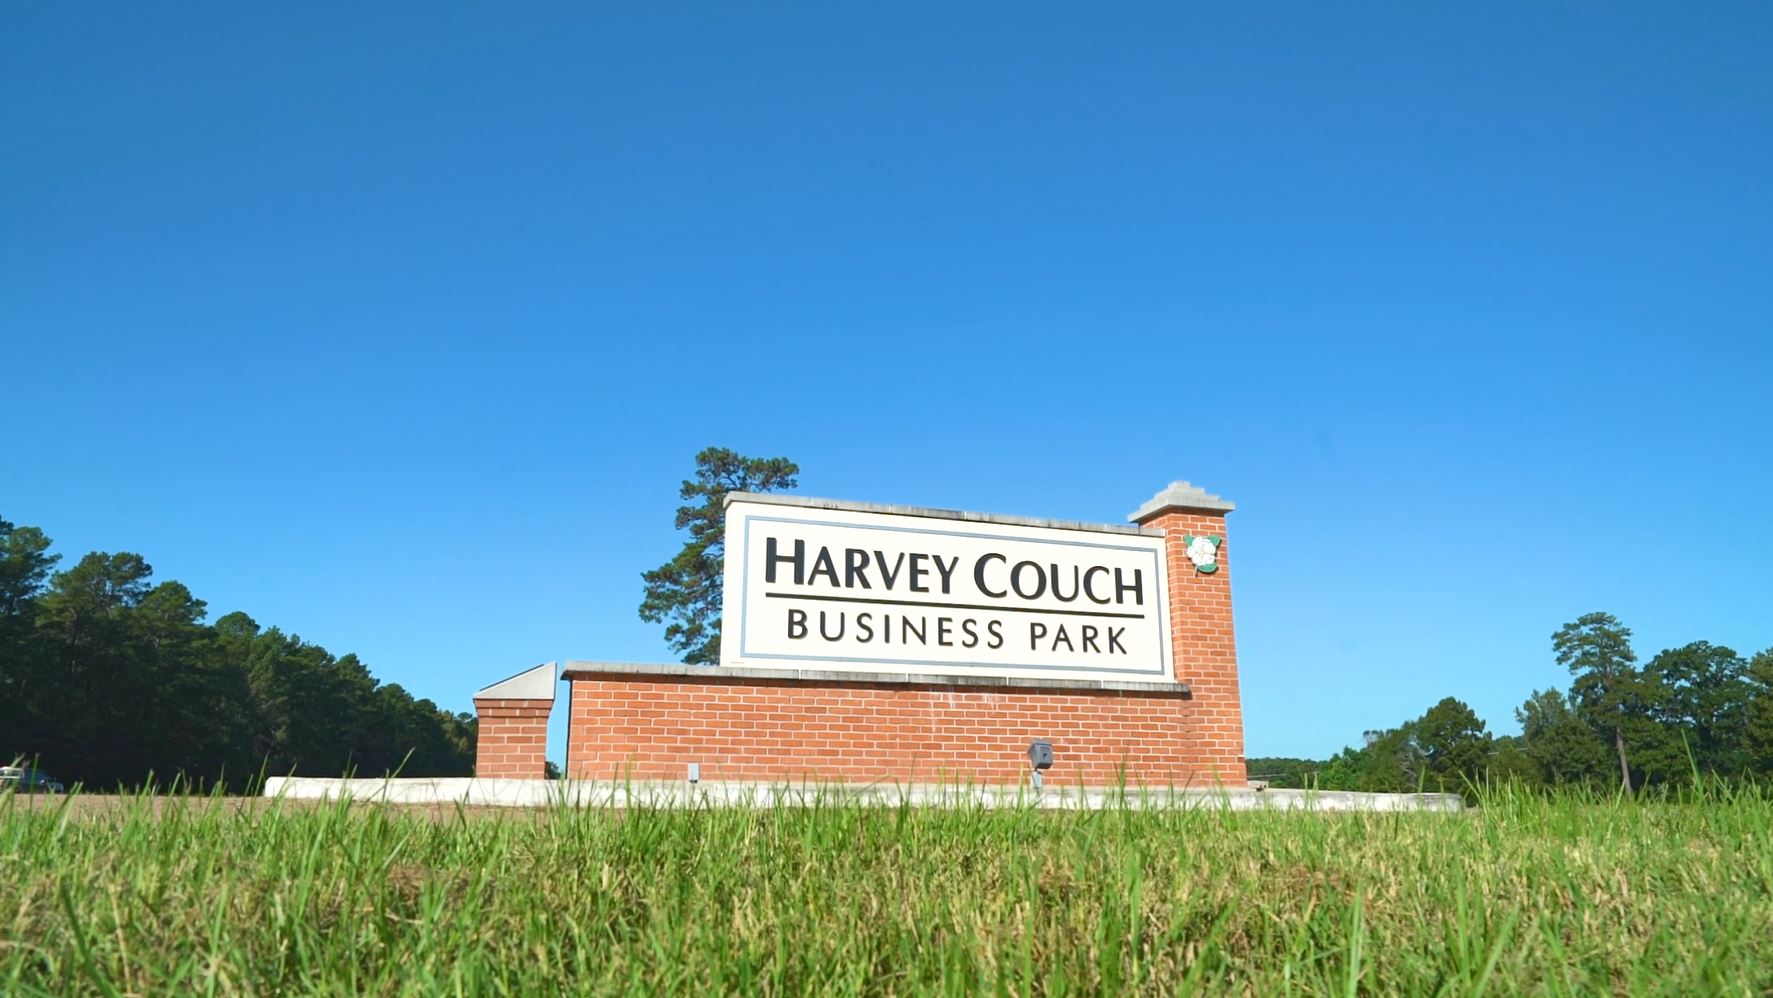 Harvey Couch Business Park